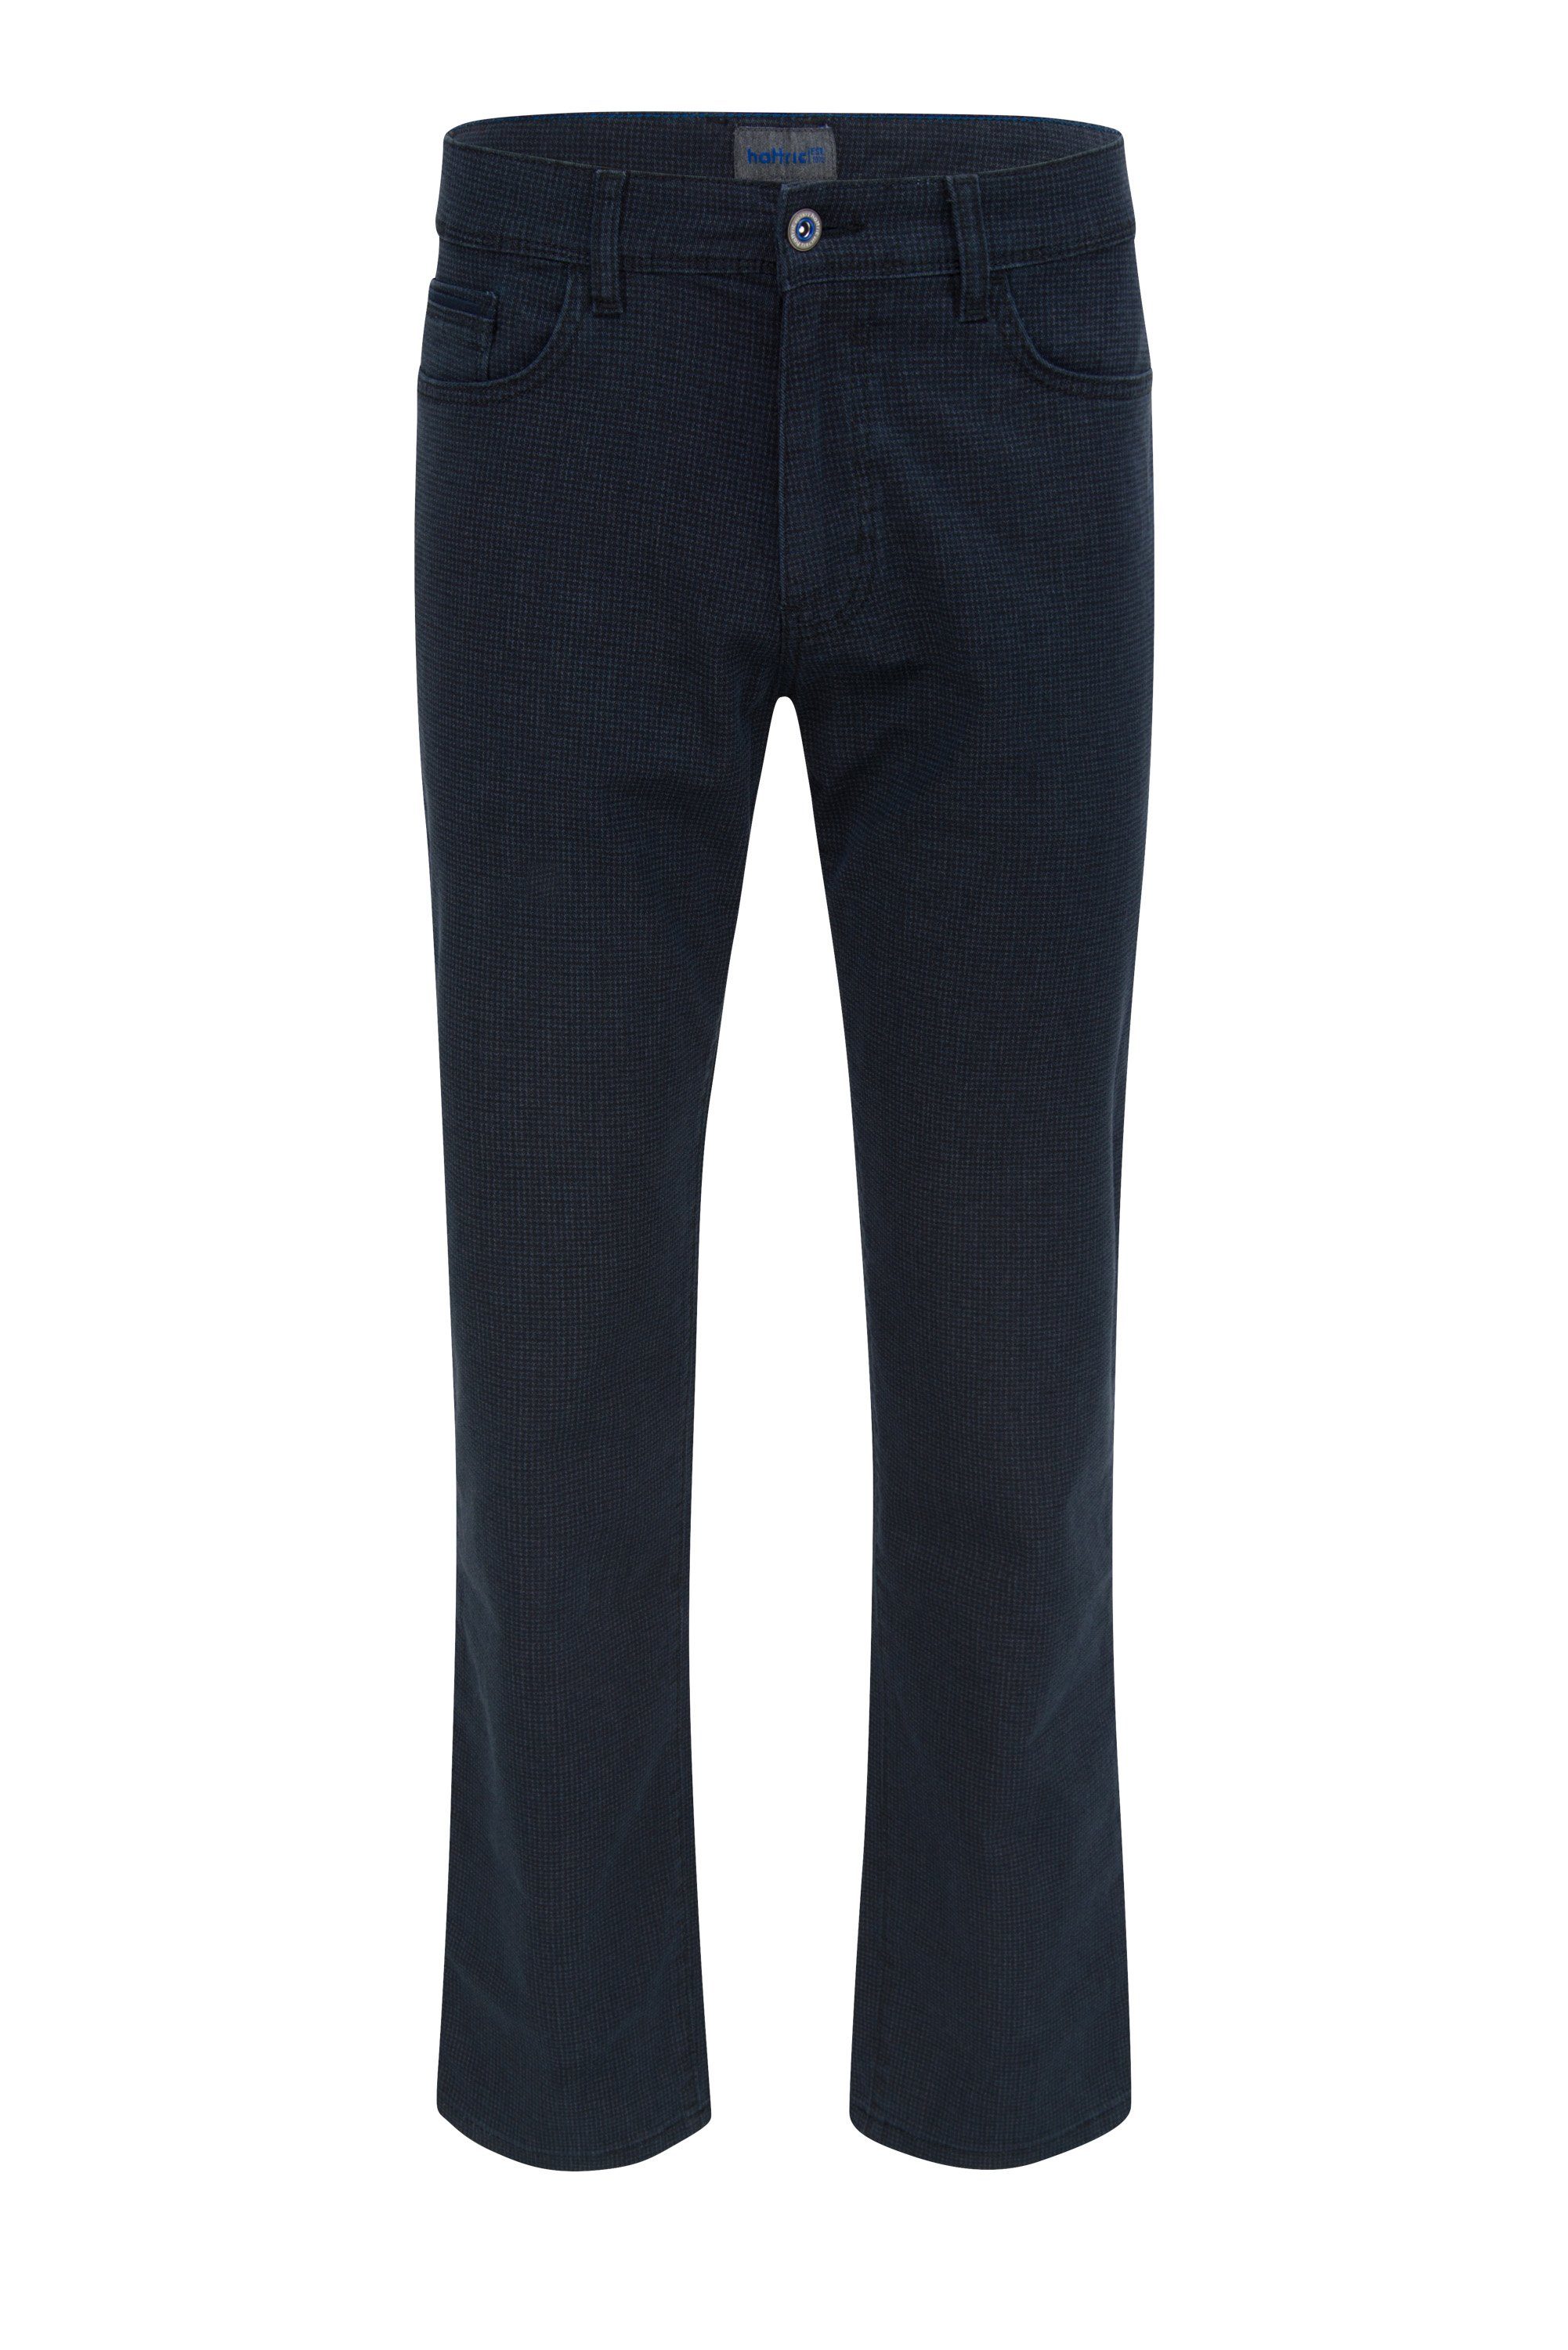 Hattric 5-Pocket-Jeans HATTRIC HUNTER blue 688085 - LOOK pepi 6255.40 WOOLEN